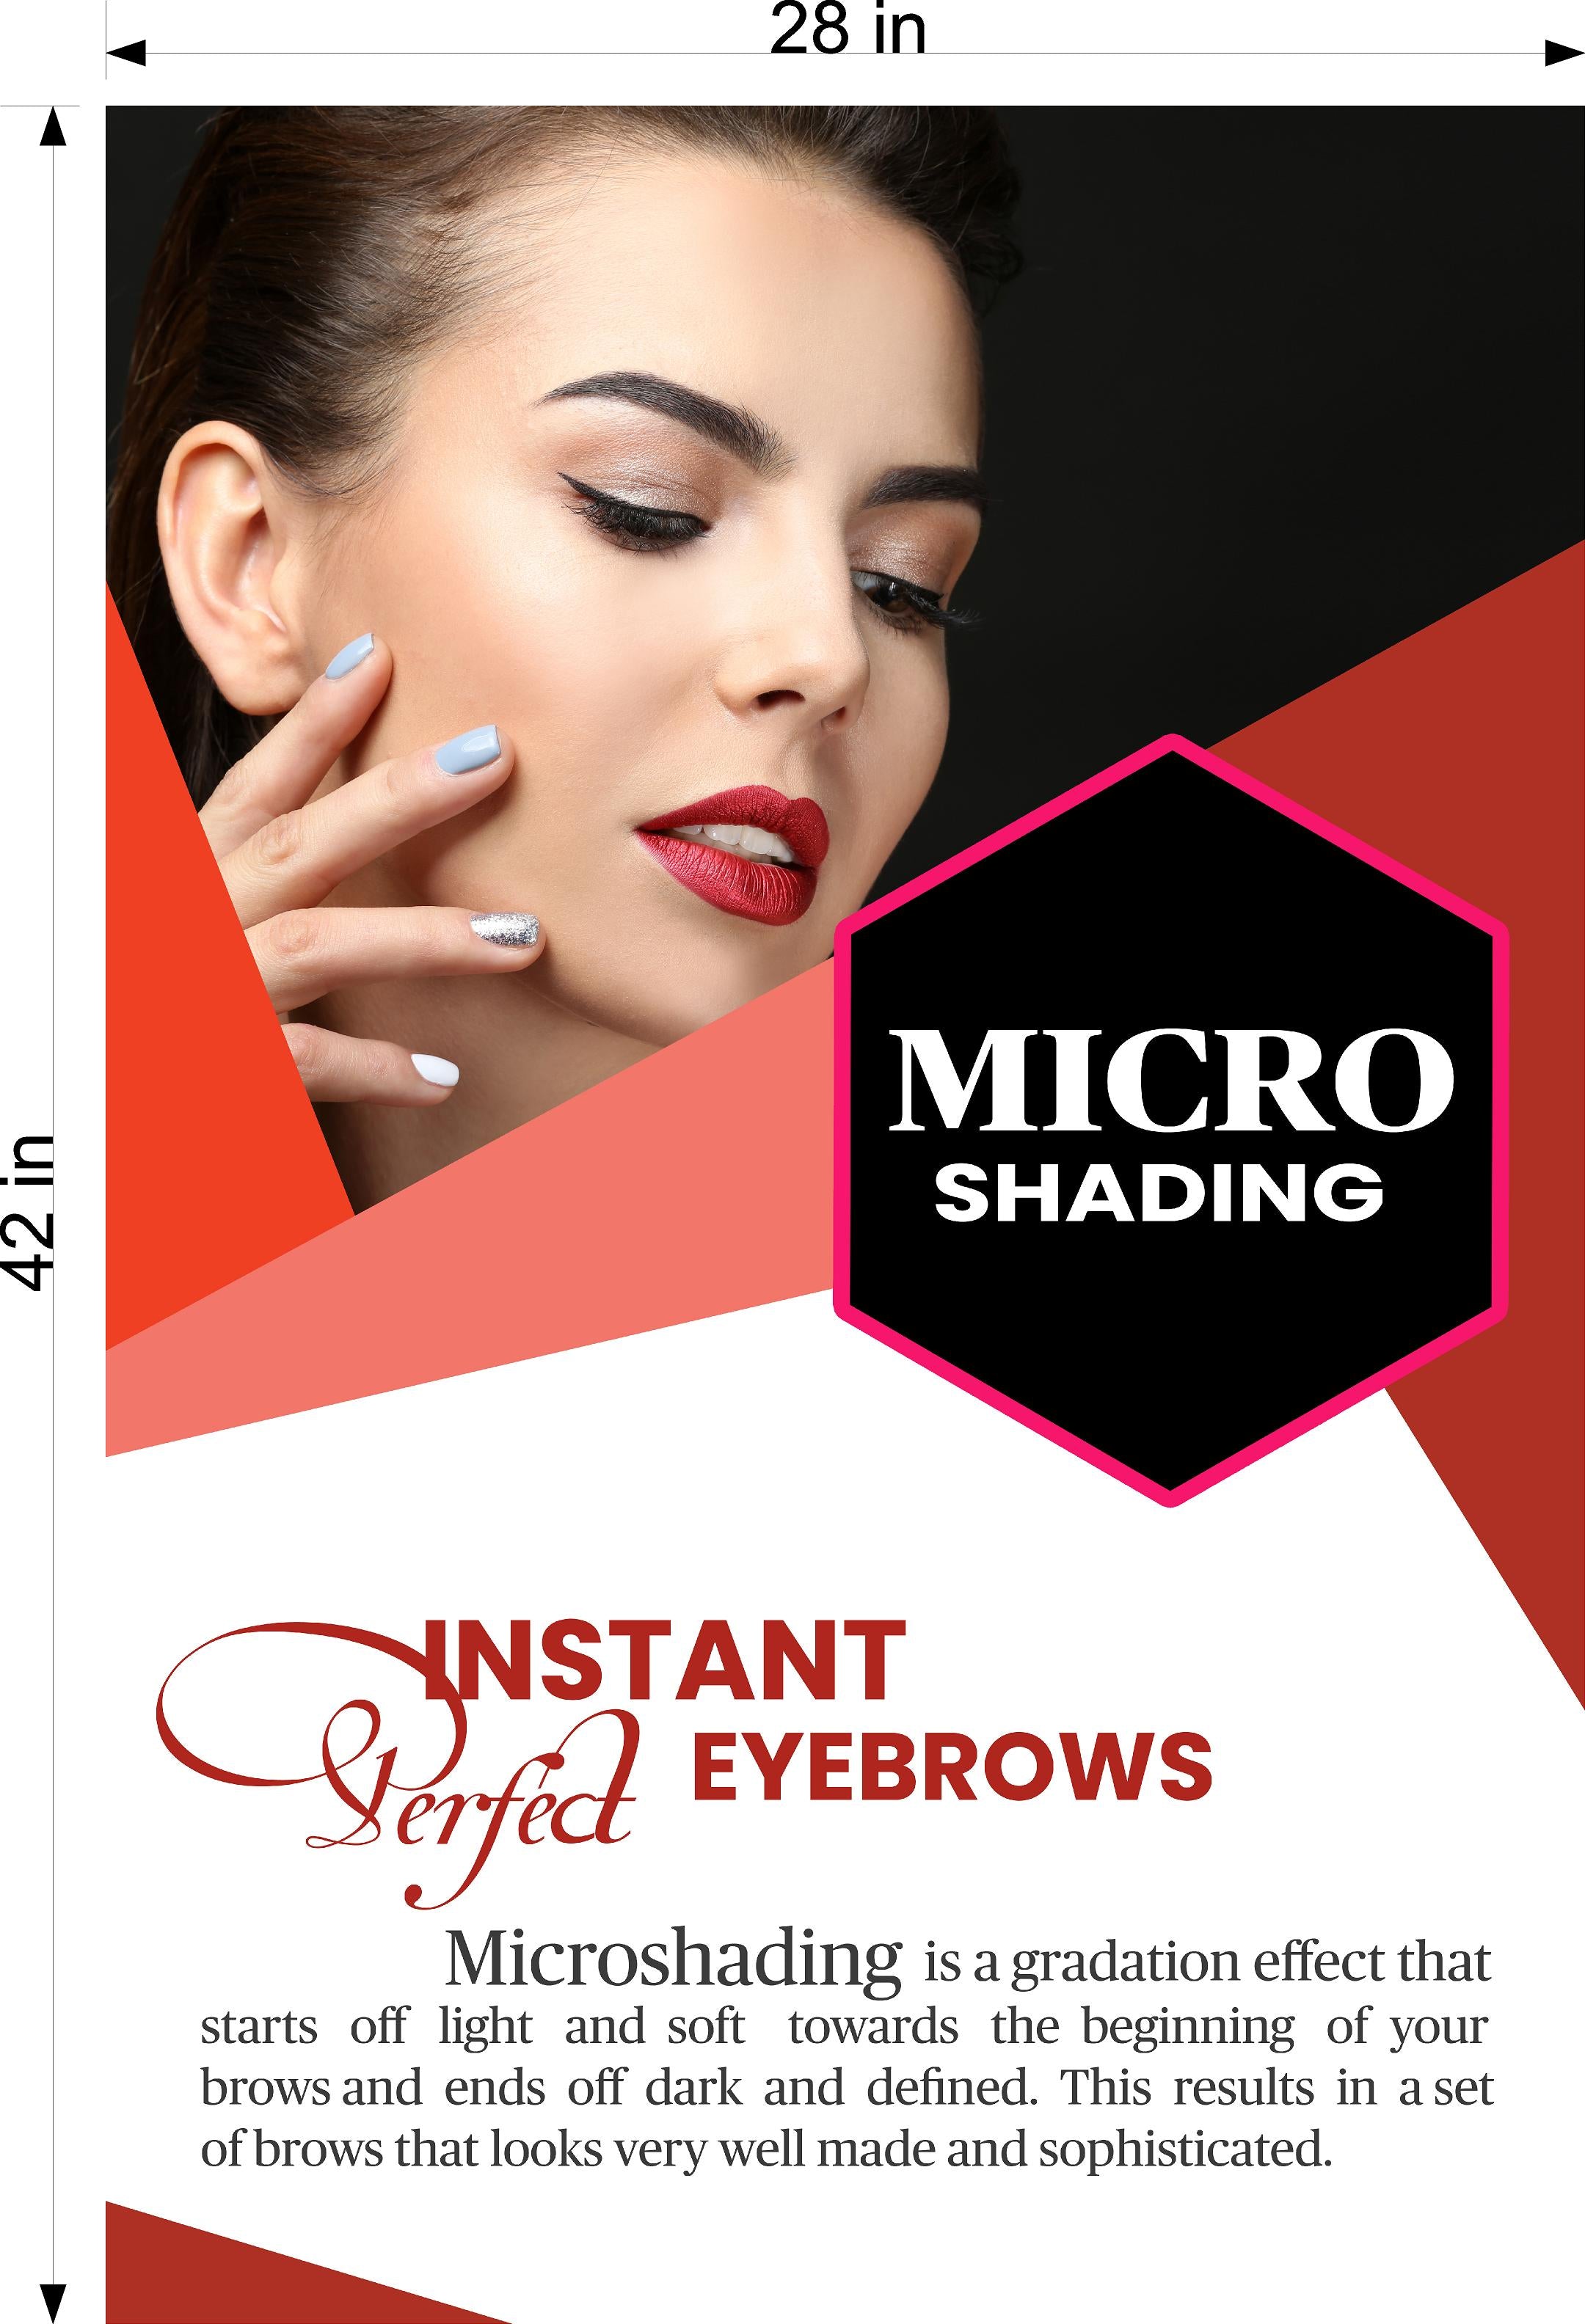 Microshading 01 Photo-Realistic Paper Poster Non-Laminated Services semi-permanent Make-Up shading Eyebrows Vertical